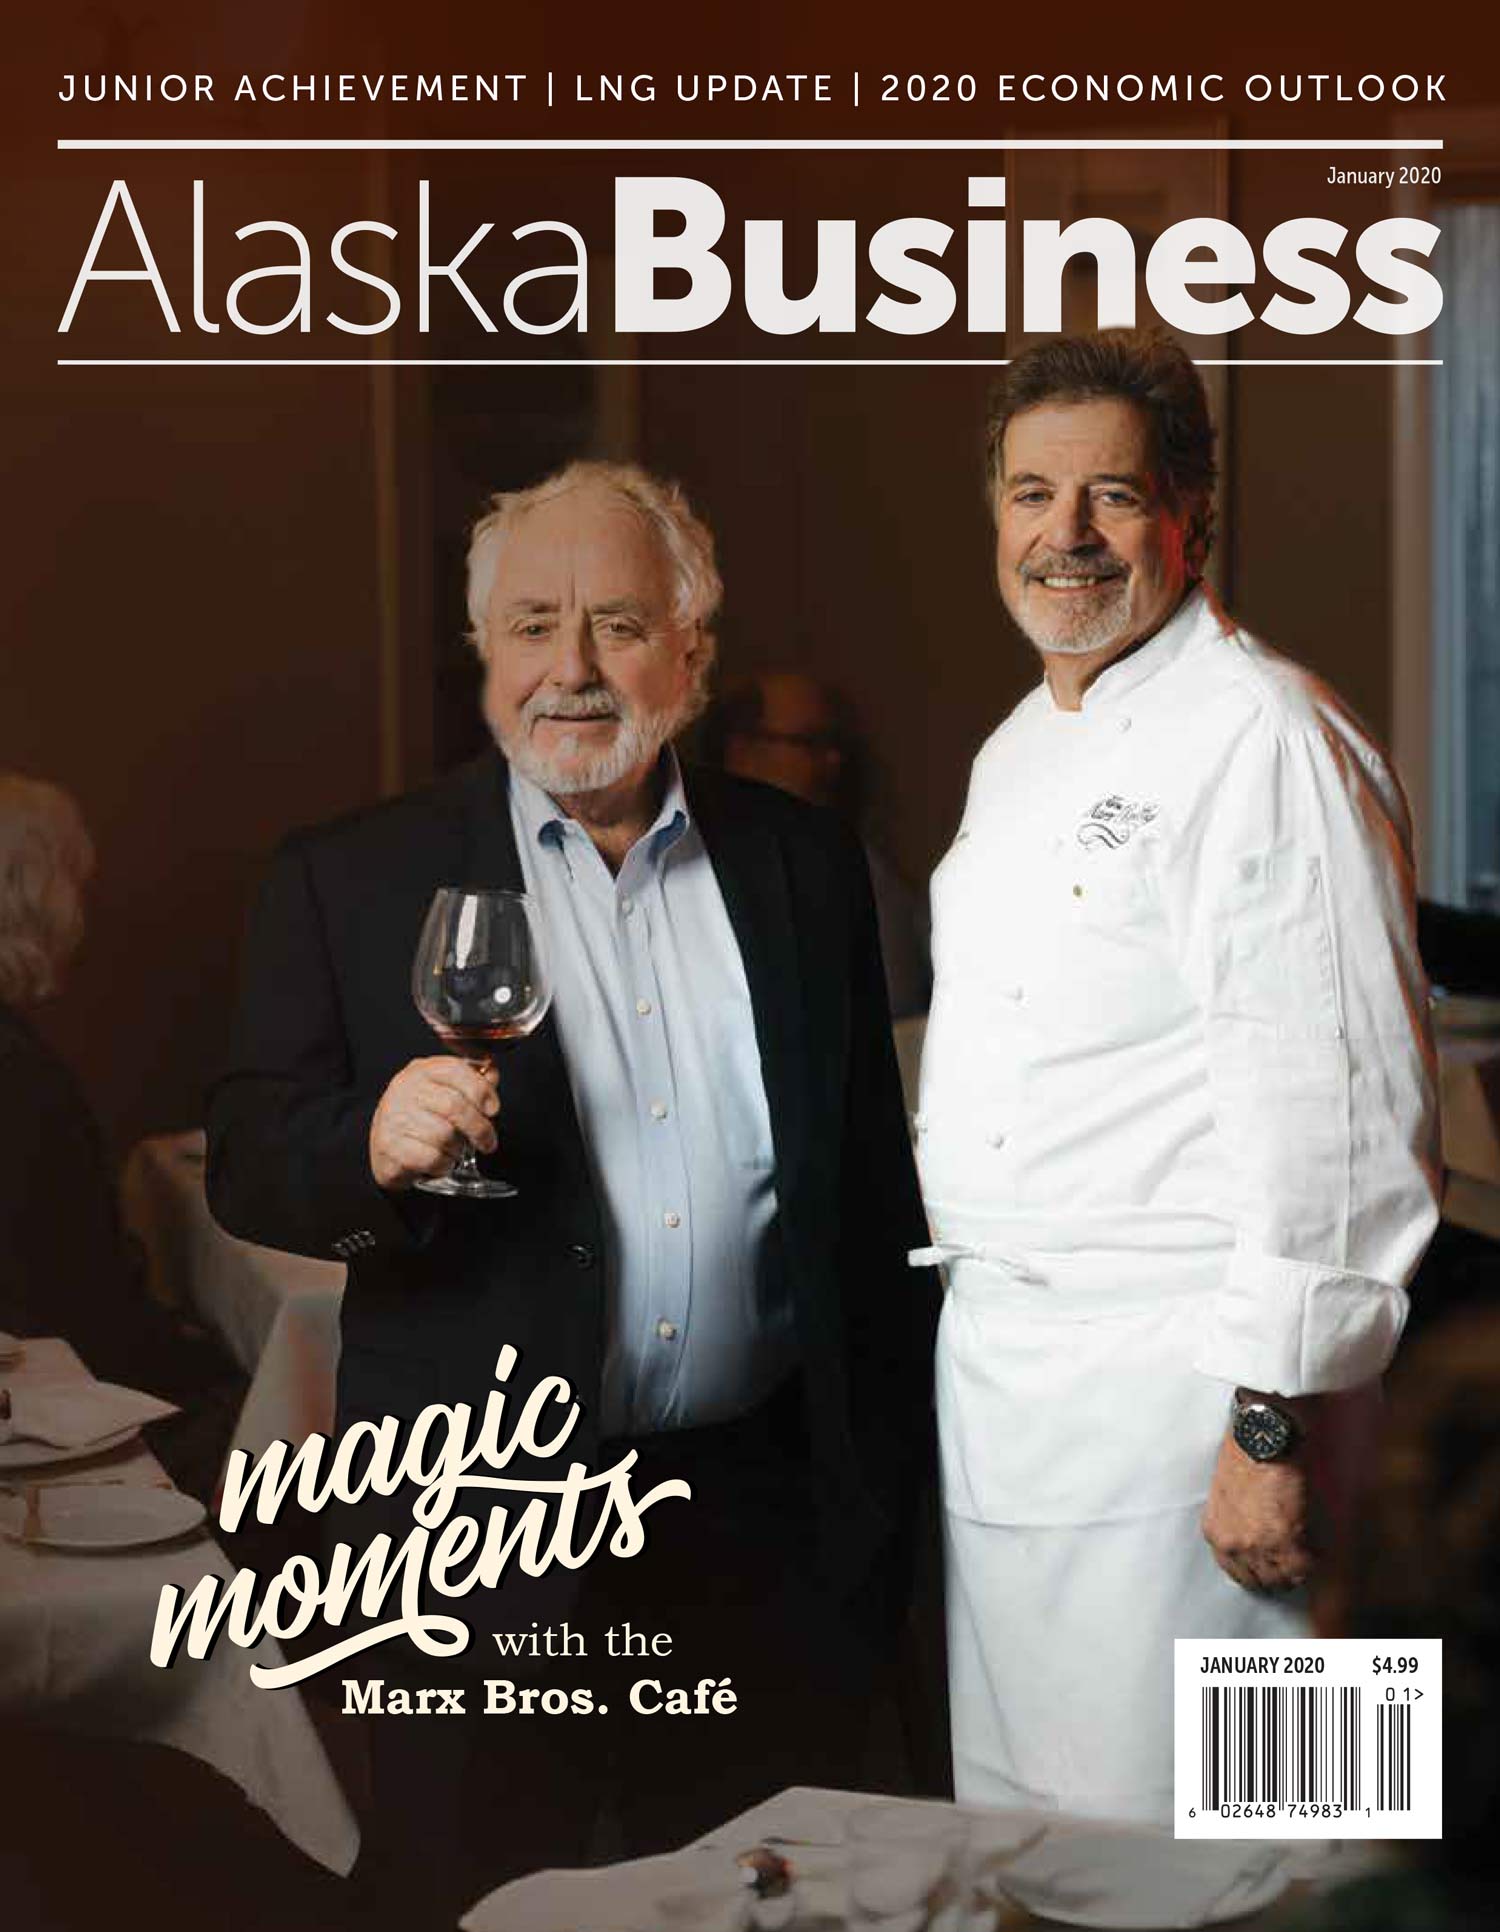 Alaska Business January 2020 cover